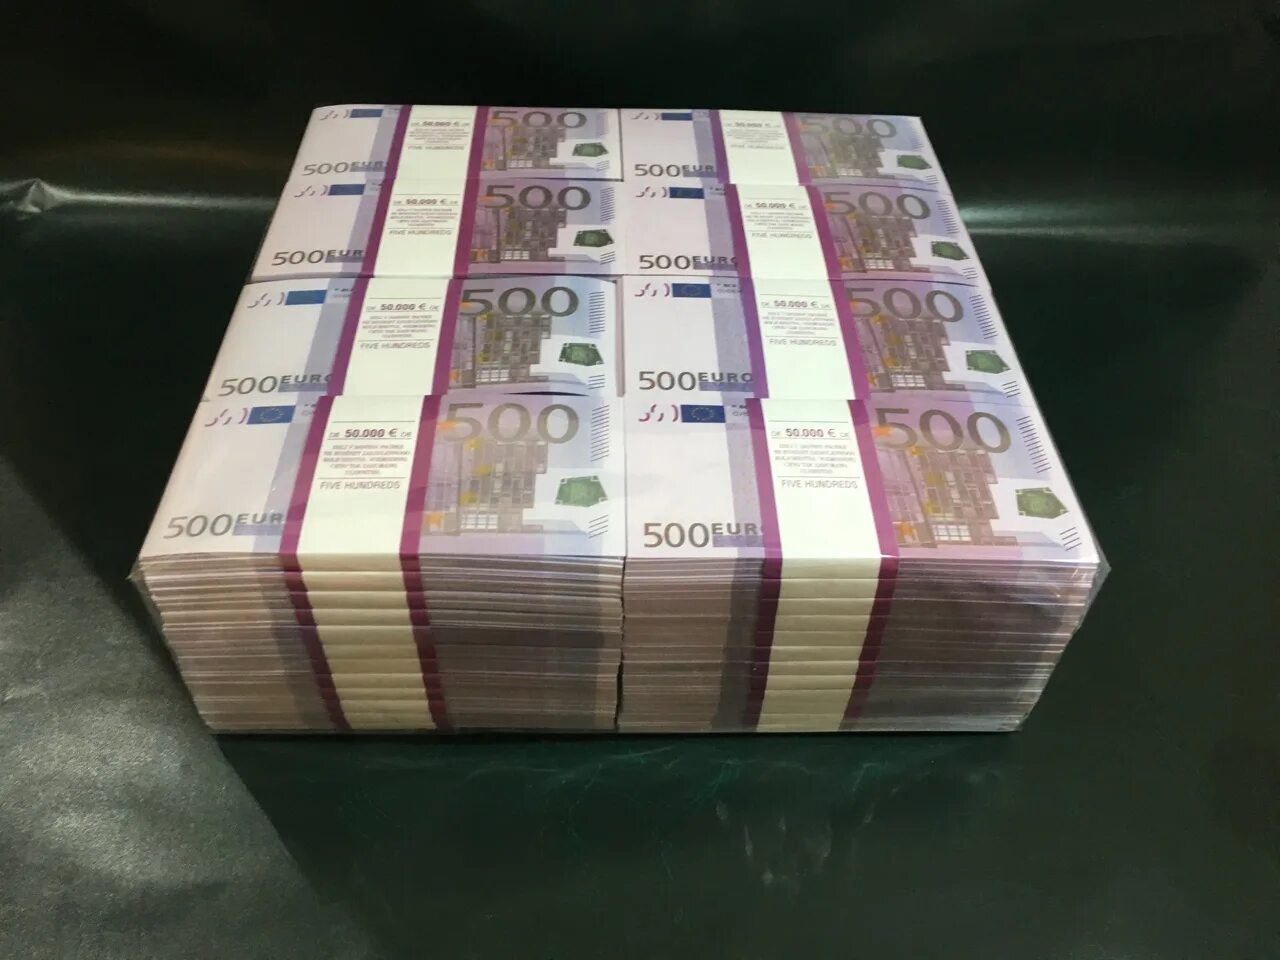 5000000 рублей в долларах. Пачки евро. 500 000 Рублей пачка. Пачки денег евро. 500 Евро пачка.